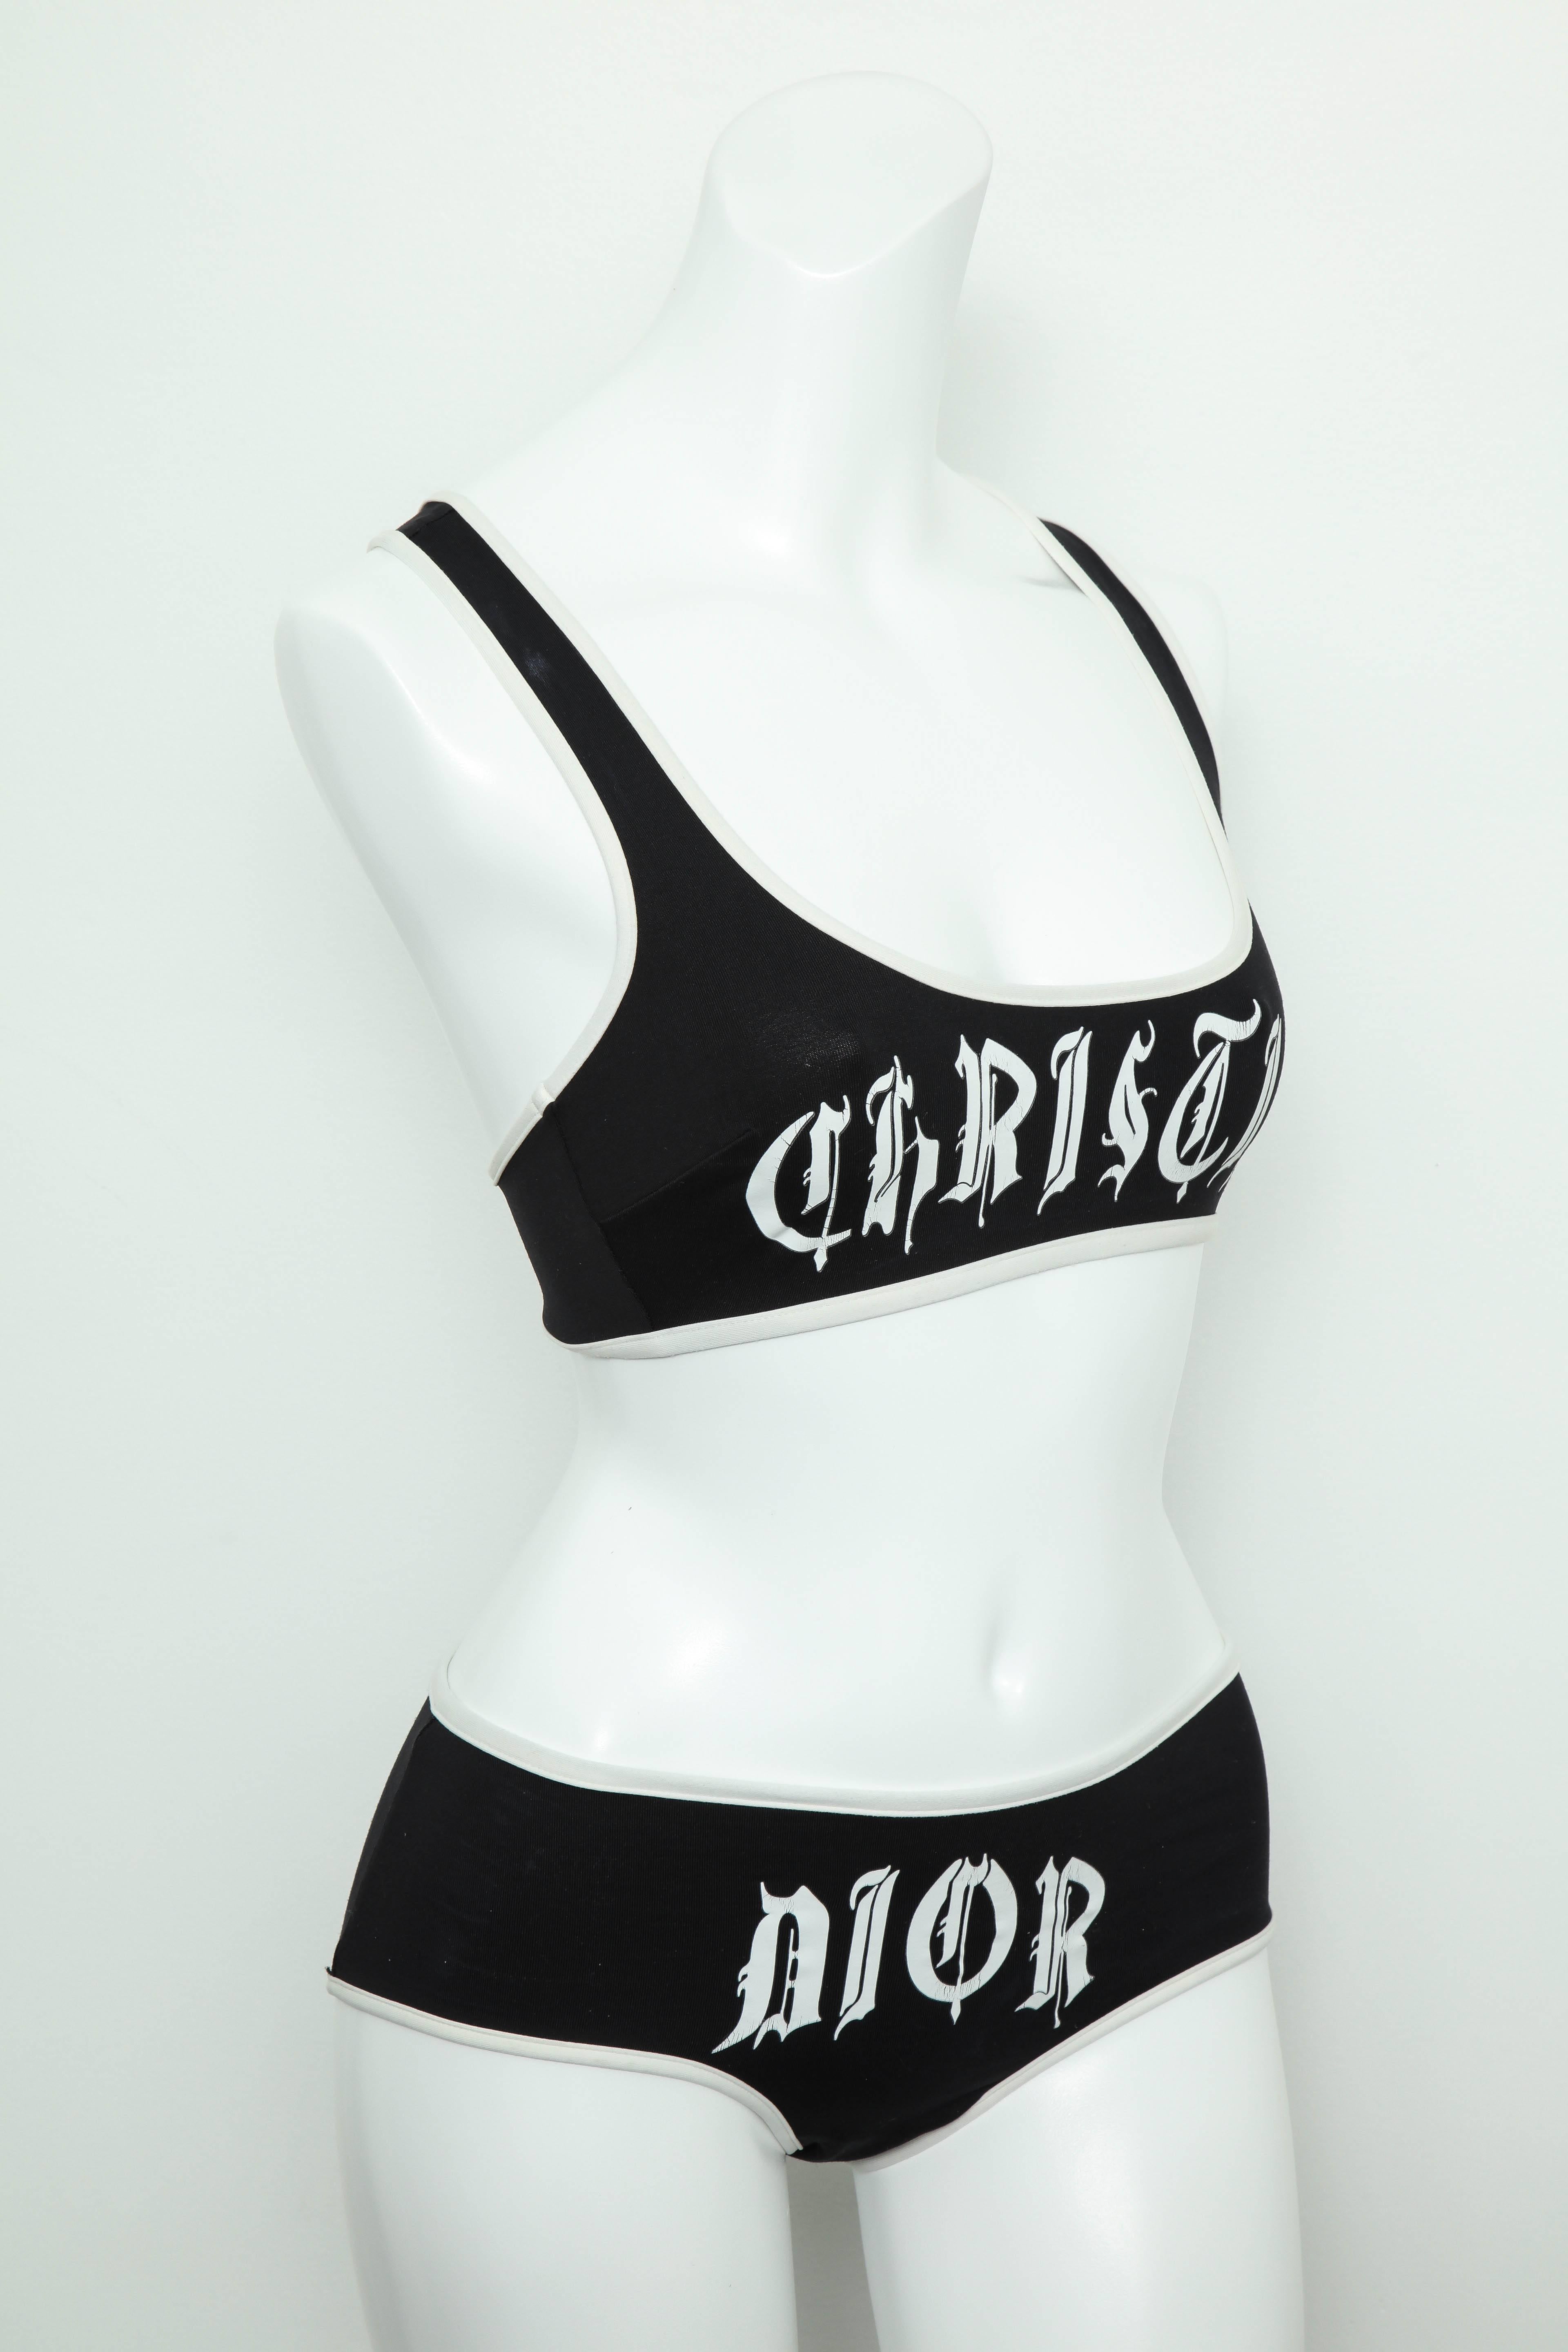 Christian Dior by John Galliano Black and White Bikini  In Excellent Condition For Sale In Chicago, IL